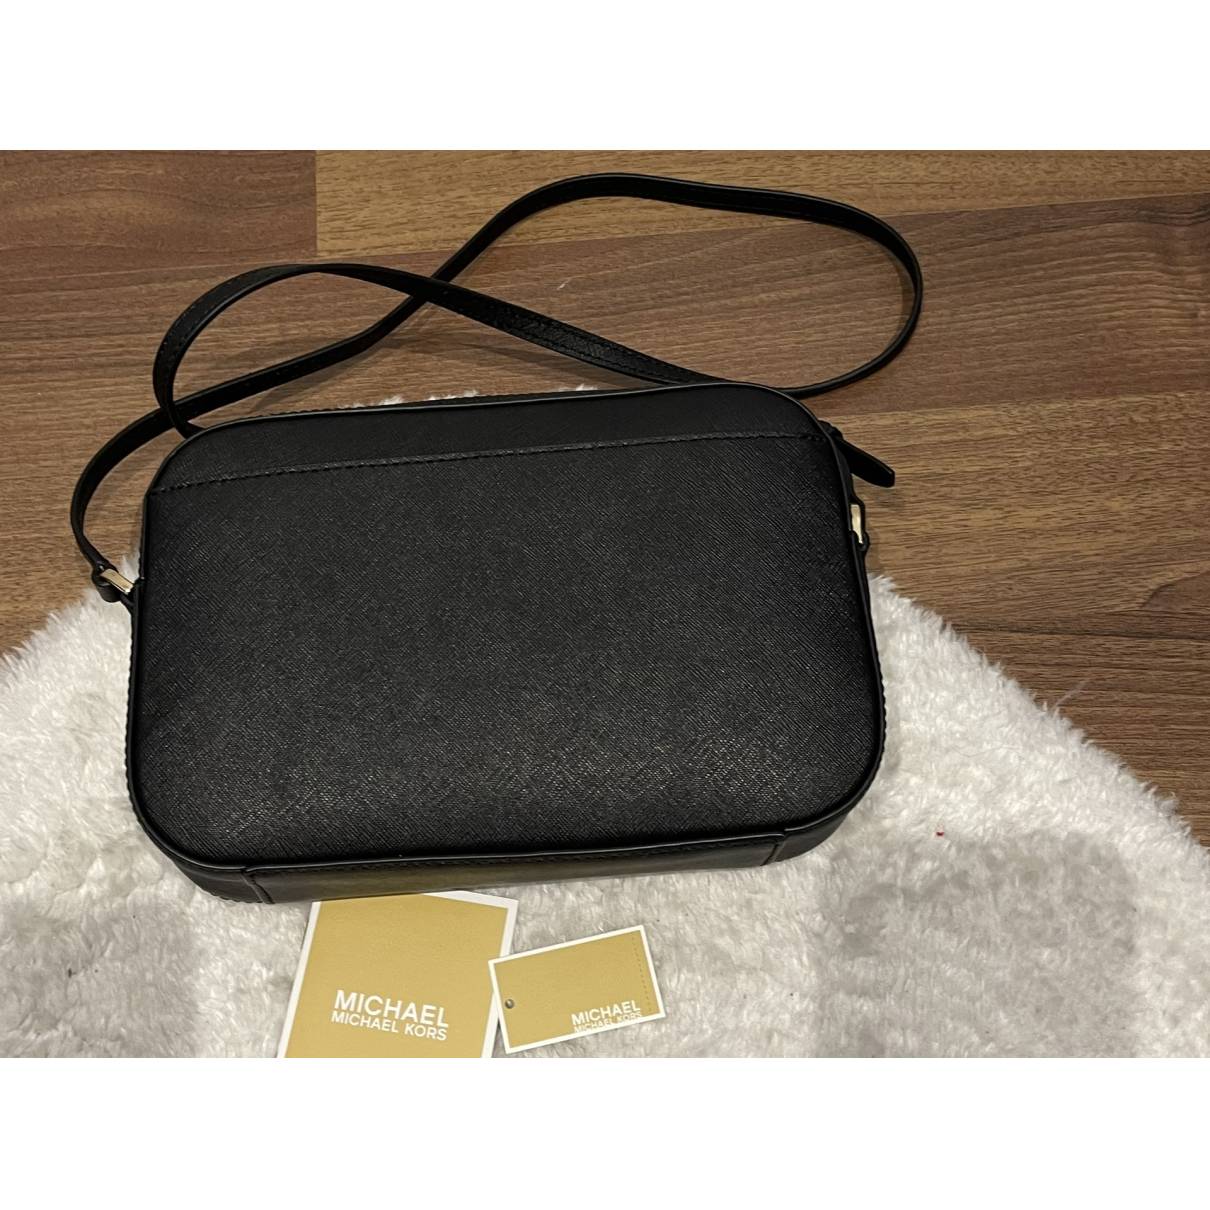 Michael Kors - Authenticated Jet Set Handbag - Leather Black Plain for Women, Never Worn